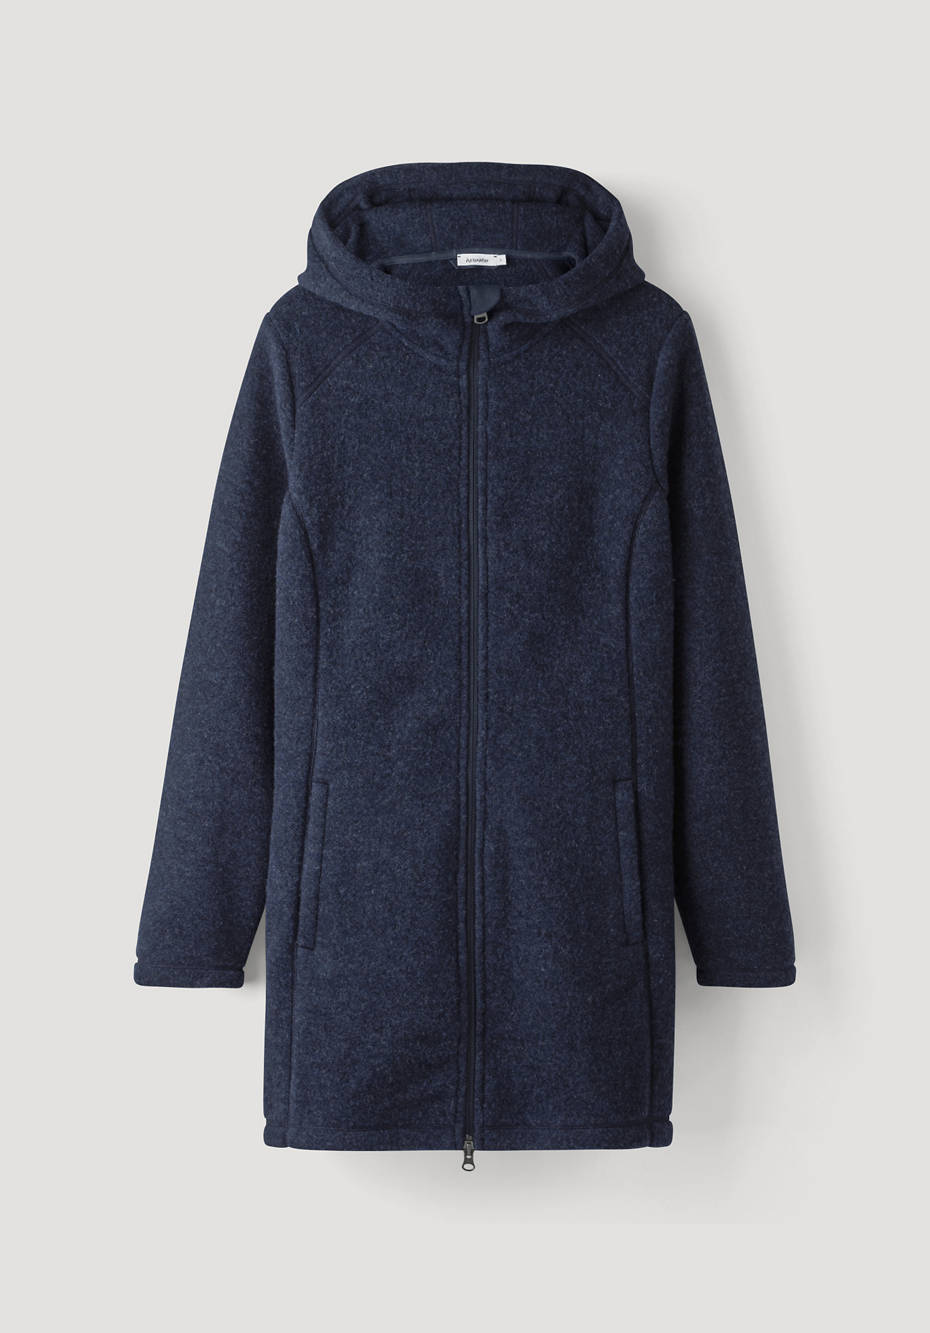 Wool fleece coat made of pure organic merino wool